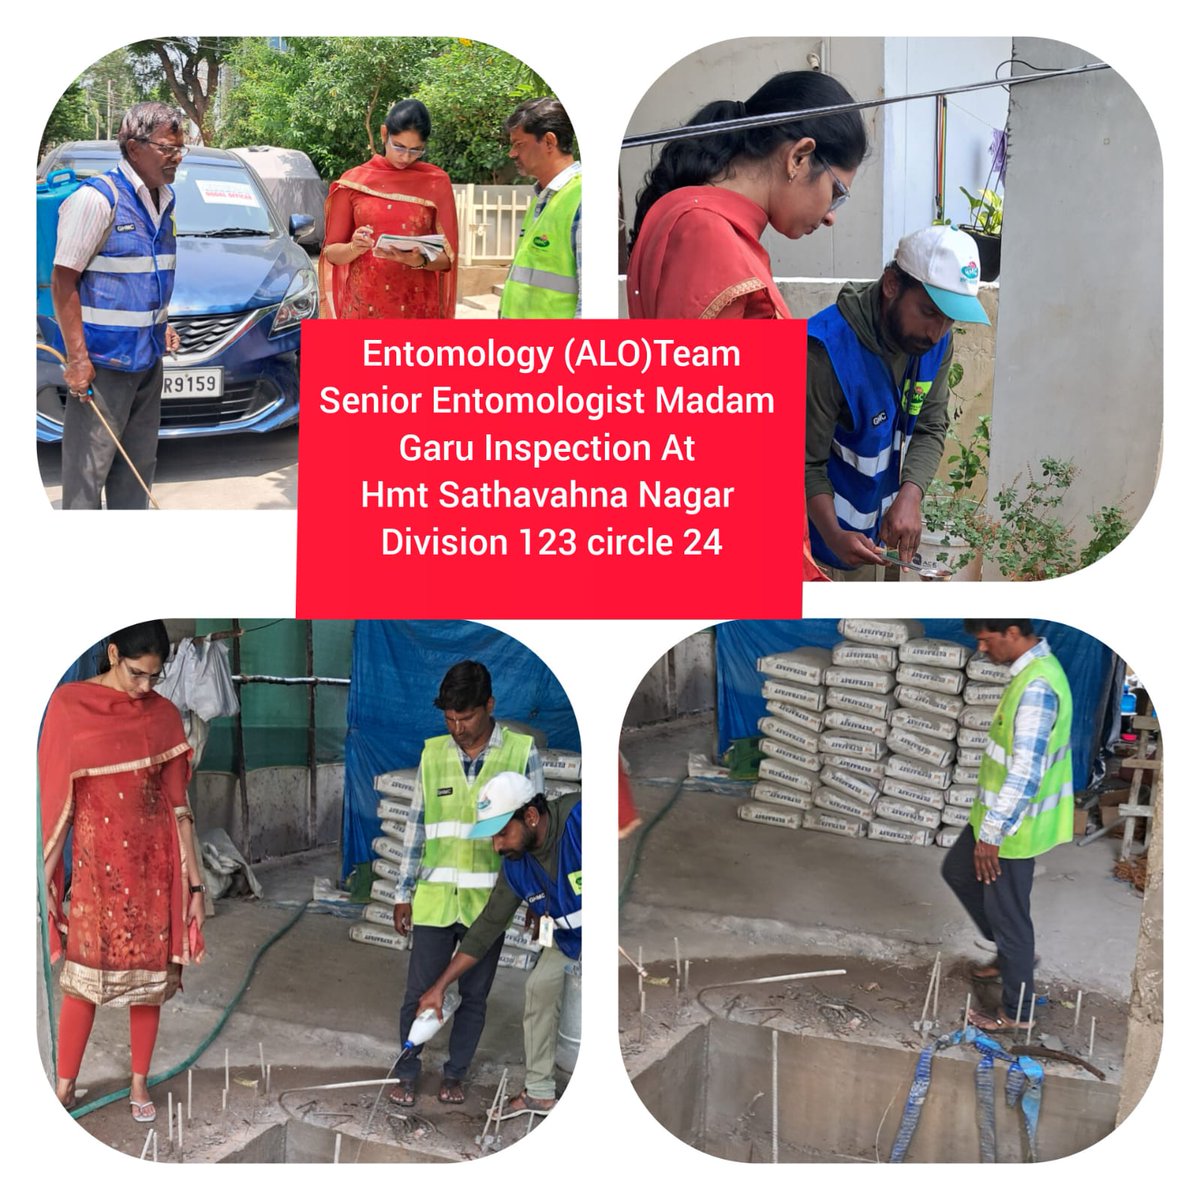 Sir Entomology (ALO) Team, Kukatpally senior Entomologist Madam Garu Inspection. At Hmt Sathavahana Nagar Division 123 Circle 24 KP. @CommissionrGHMC @GHMCOnline @ACEntomolgyGHMC @ZC_Kukatpally1 @DC_Kukatpally @ce_ghmc @Seniorento99799